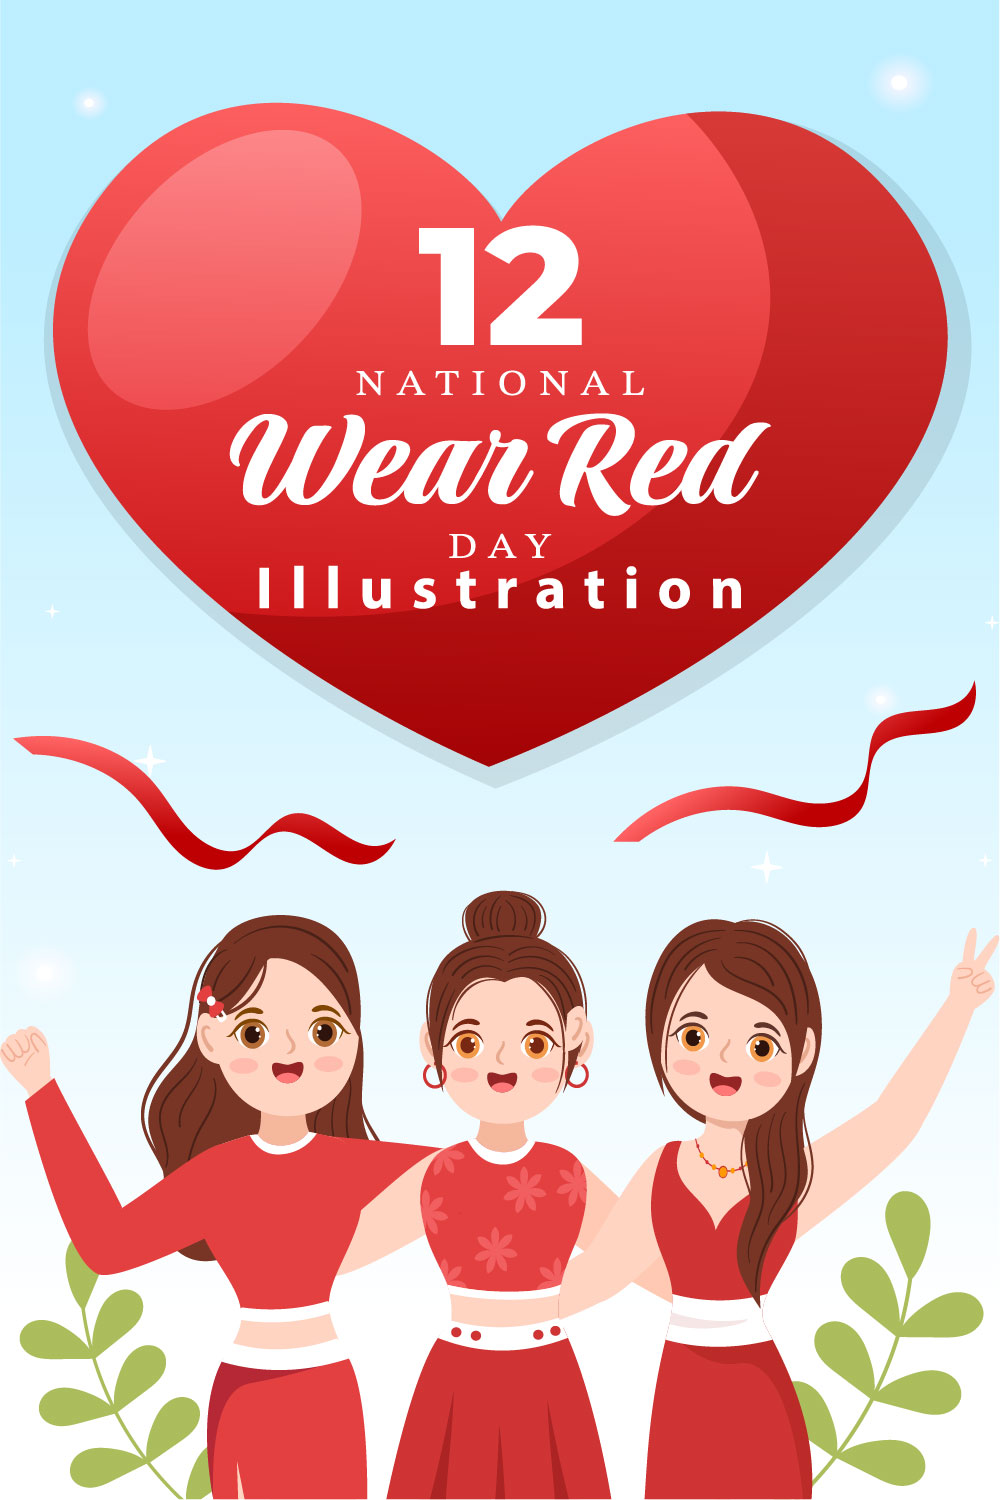 12 National Wear Red Day Illustration pinterest image.